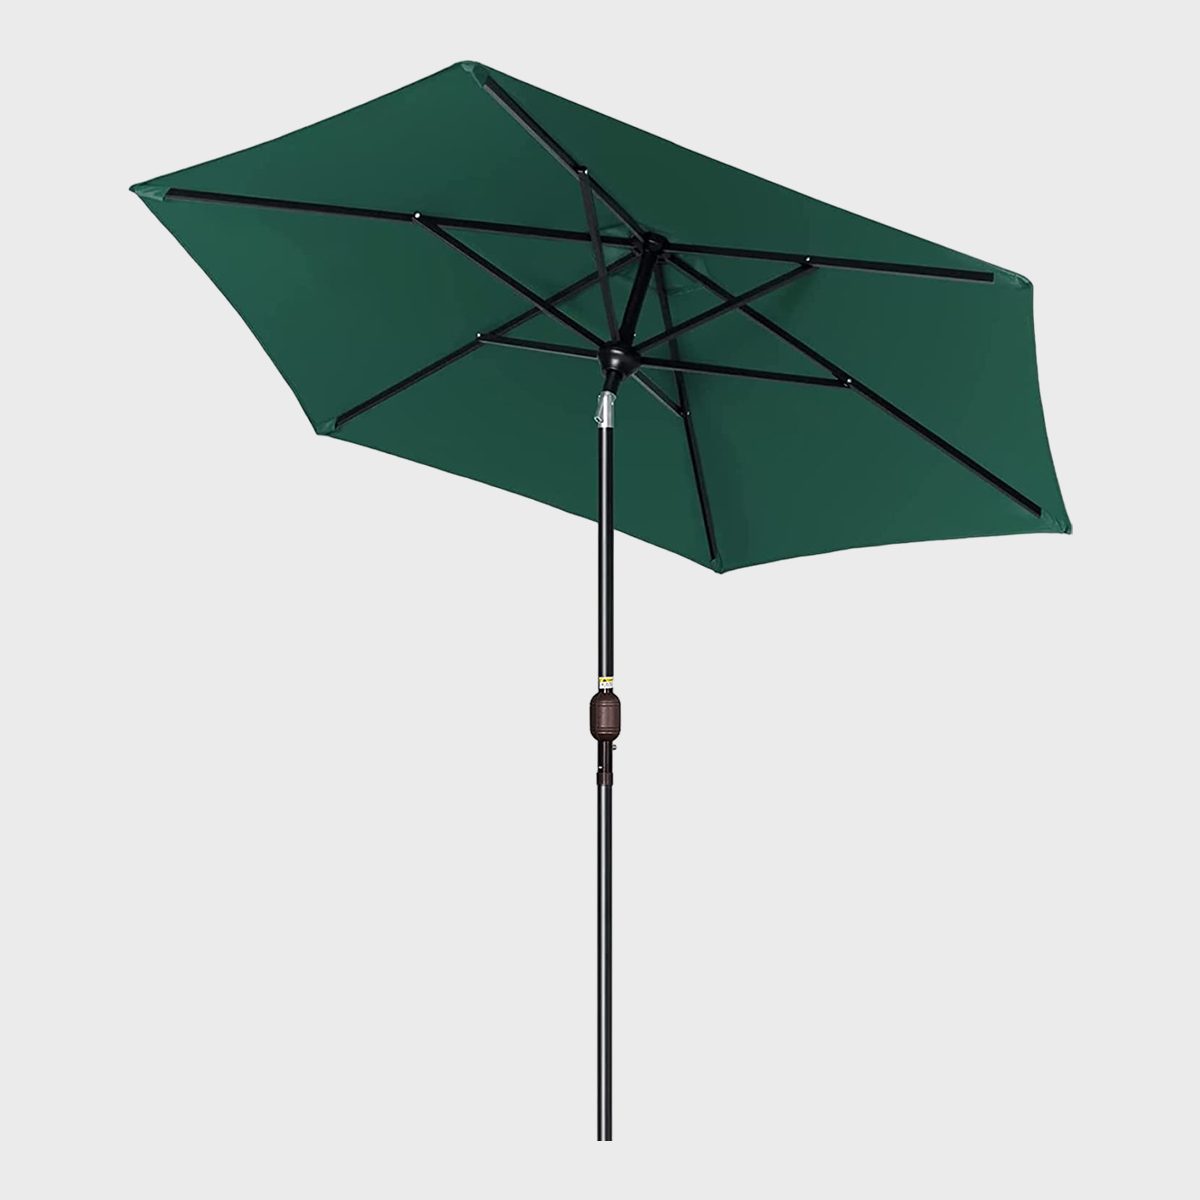 Patio Umbrella Ecomm Via Amazon.com